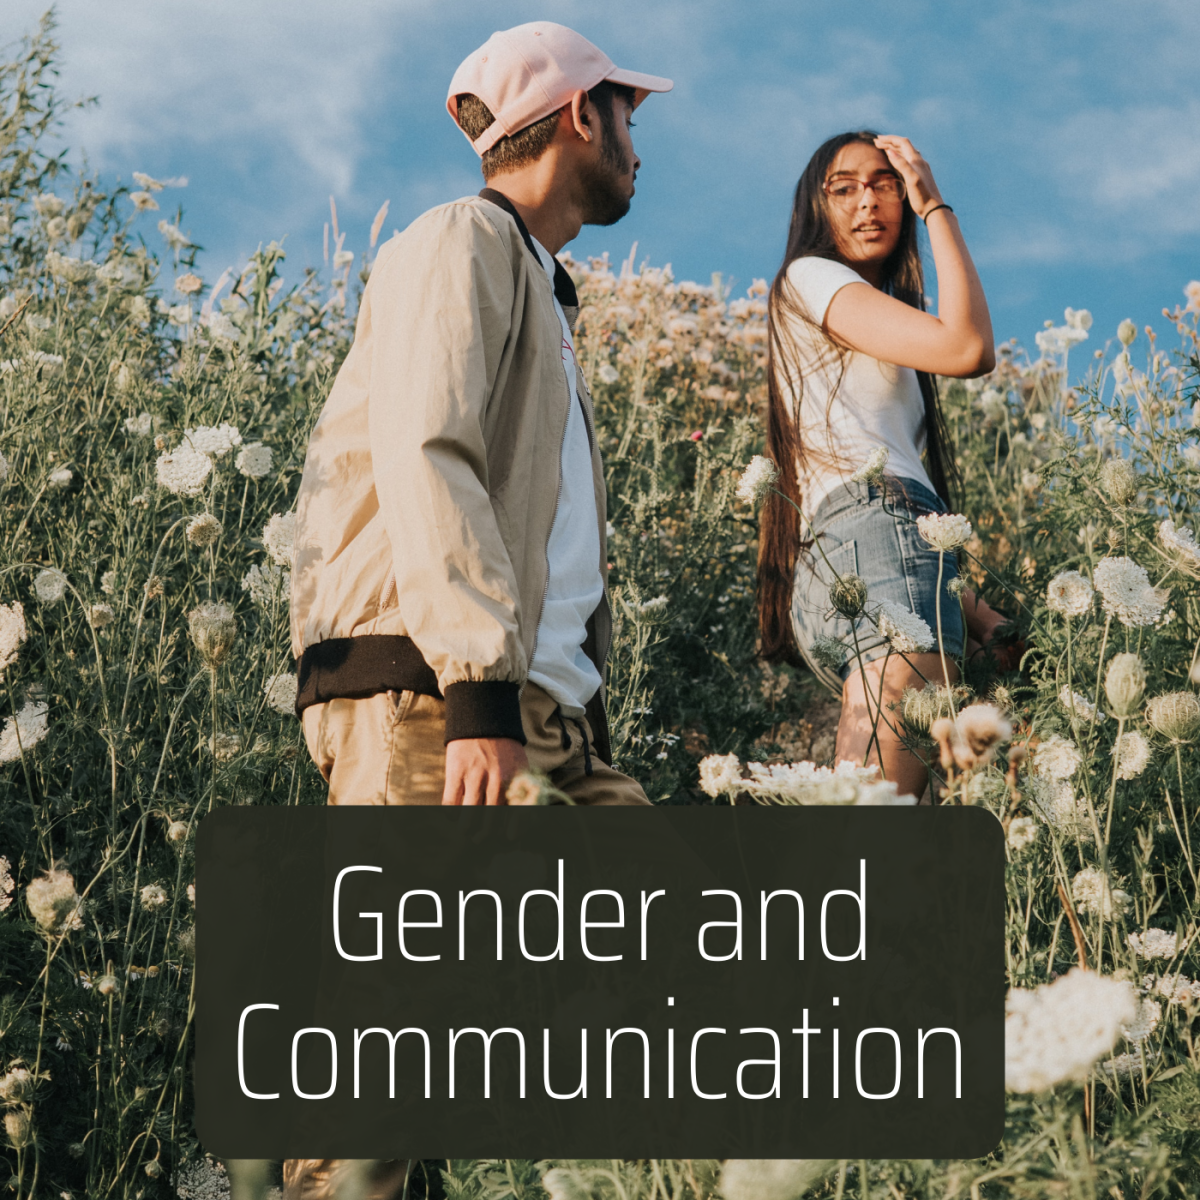 How Does Gender Affect Communication?